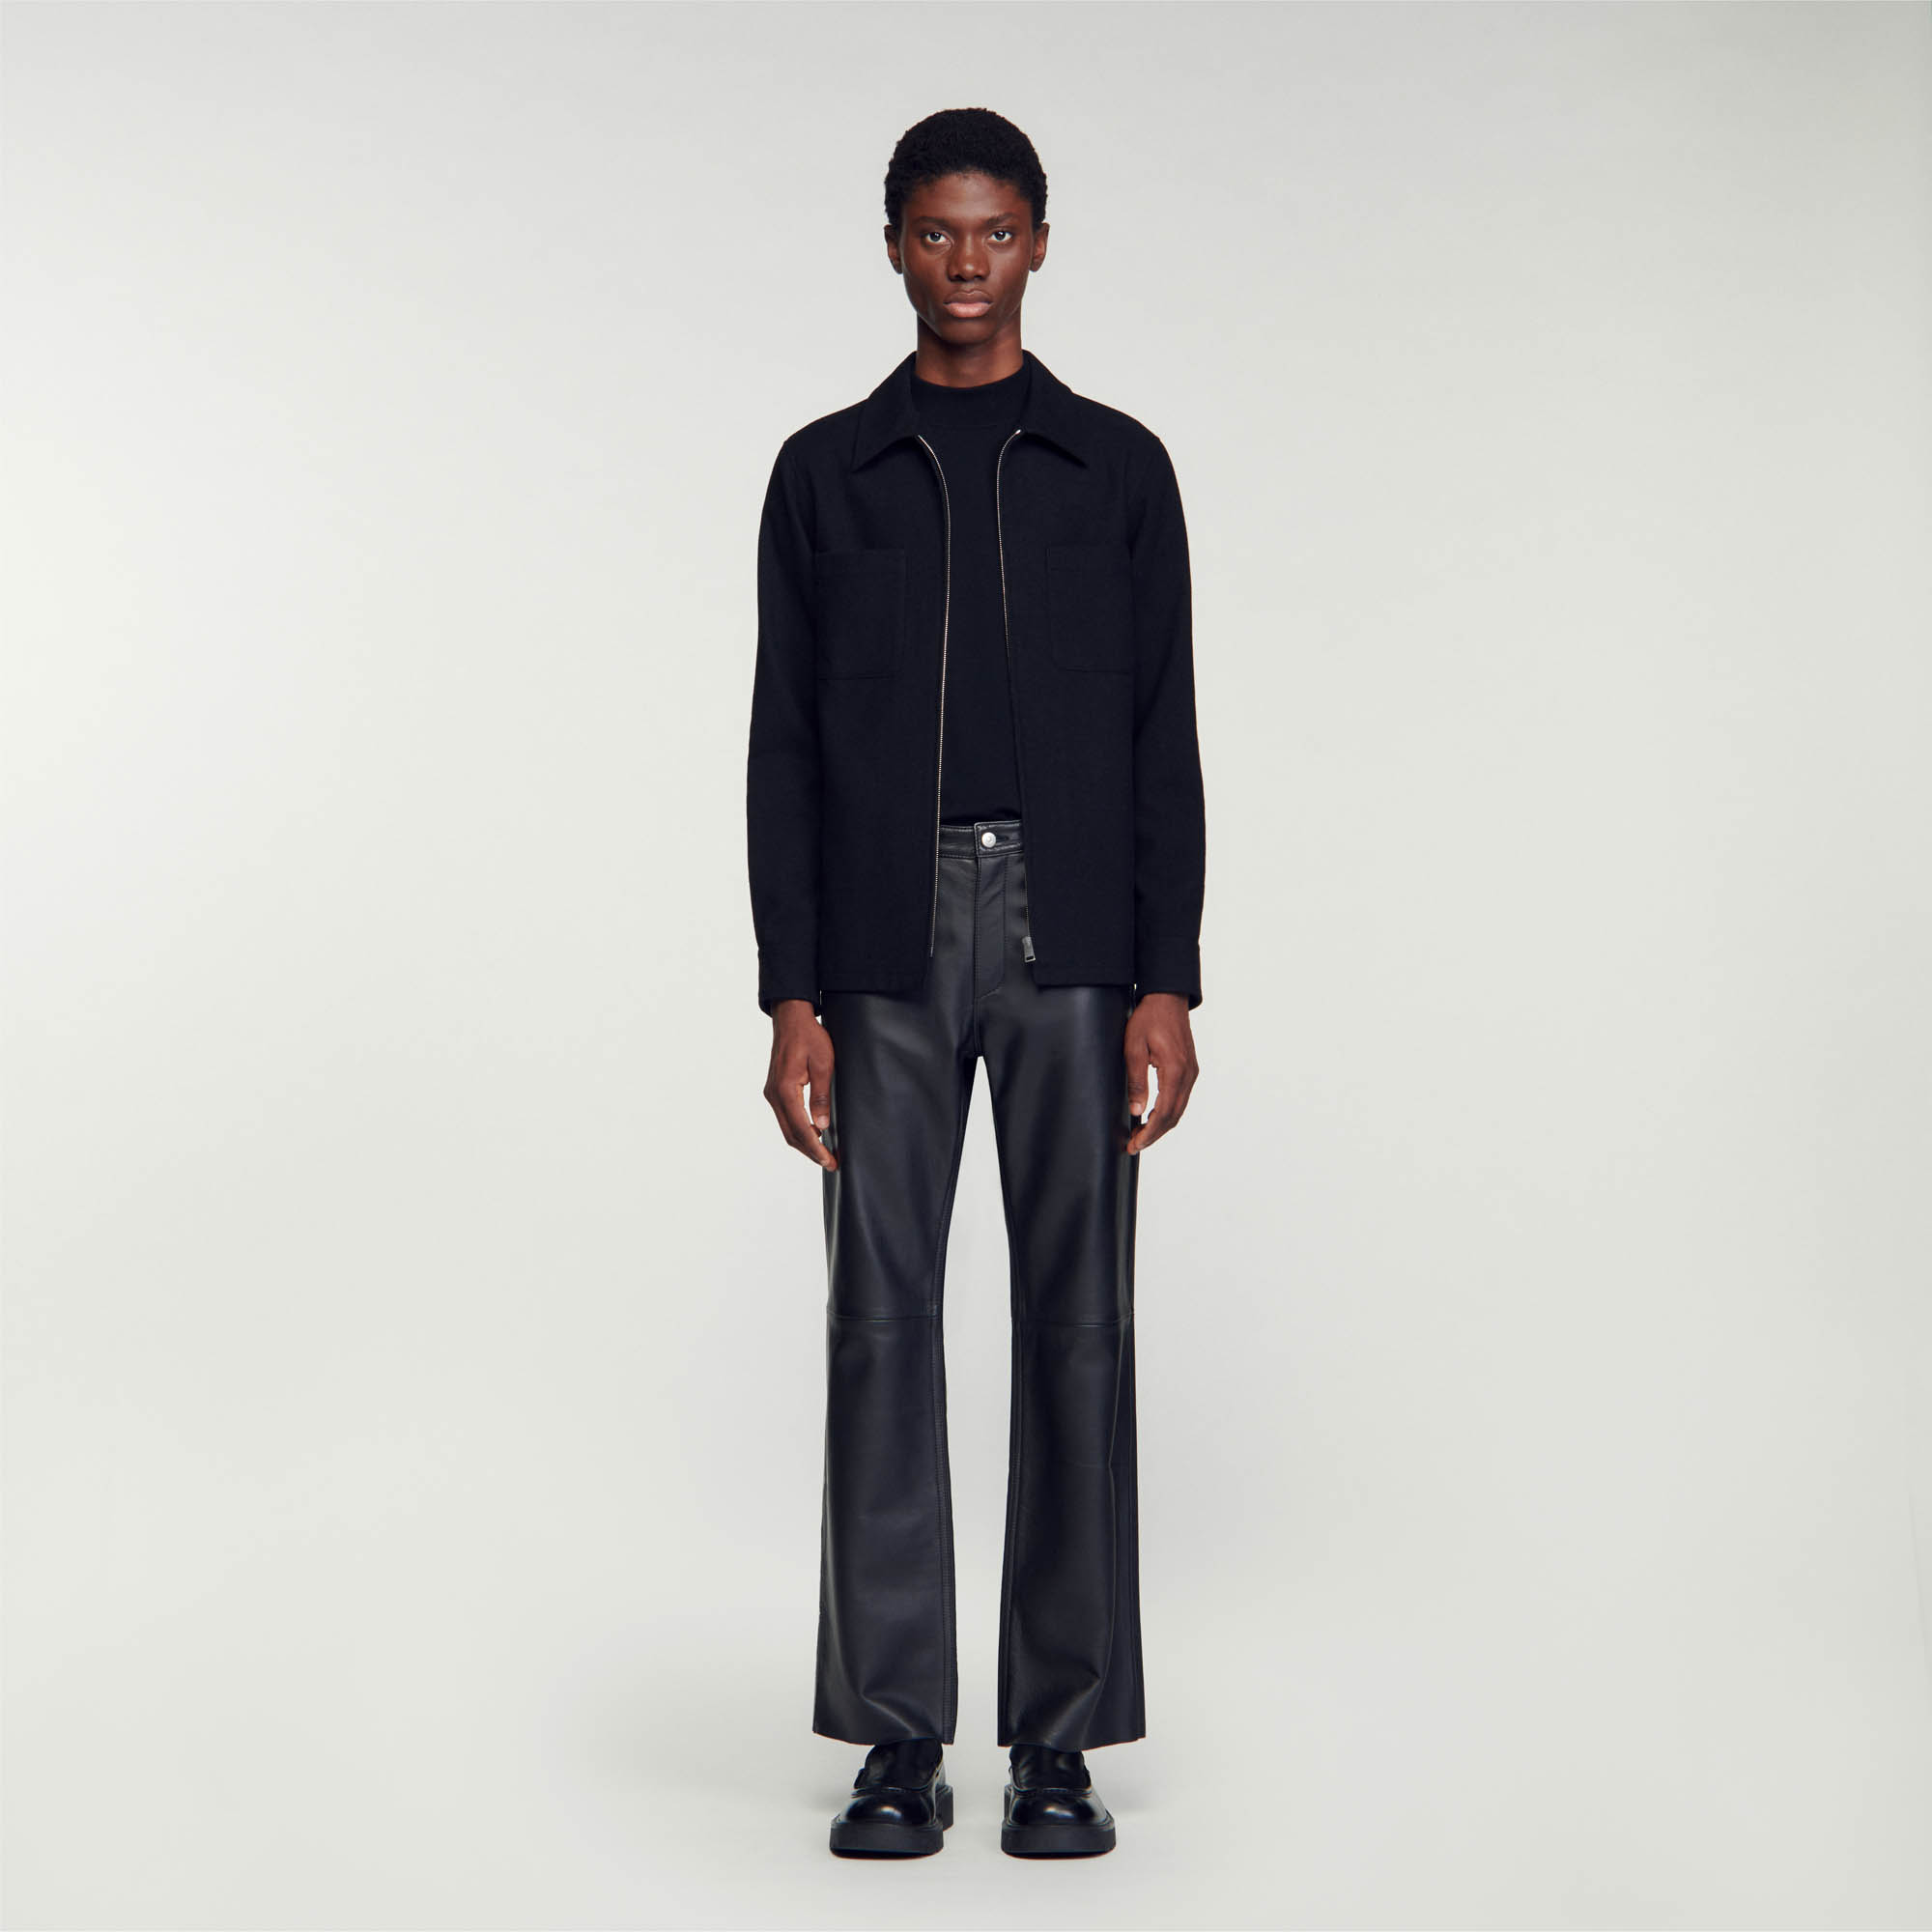 Sandro wool Wool overshirt with zip fastening, shirt collar and long sleeves